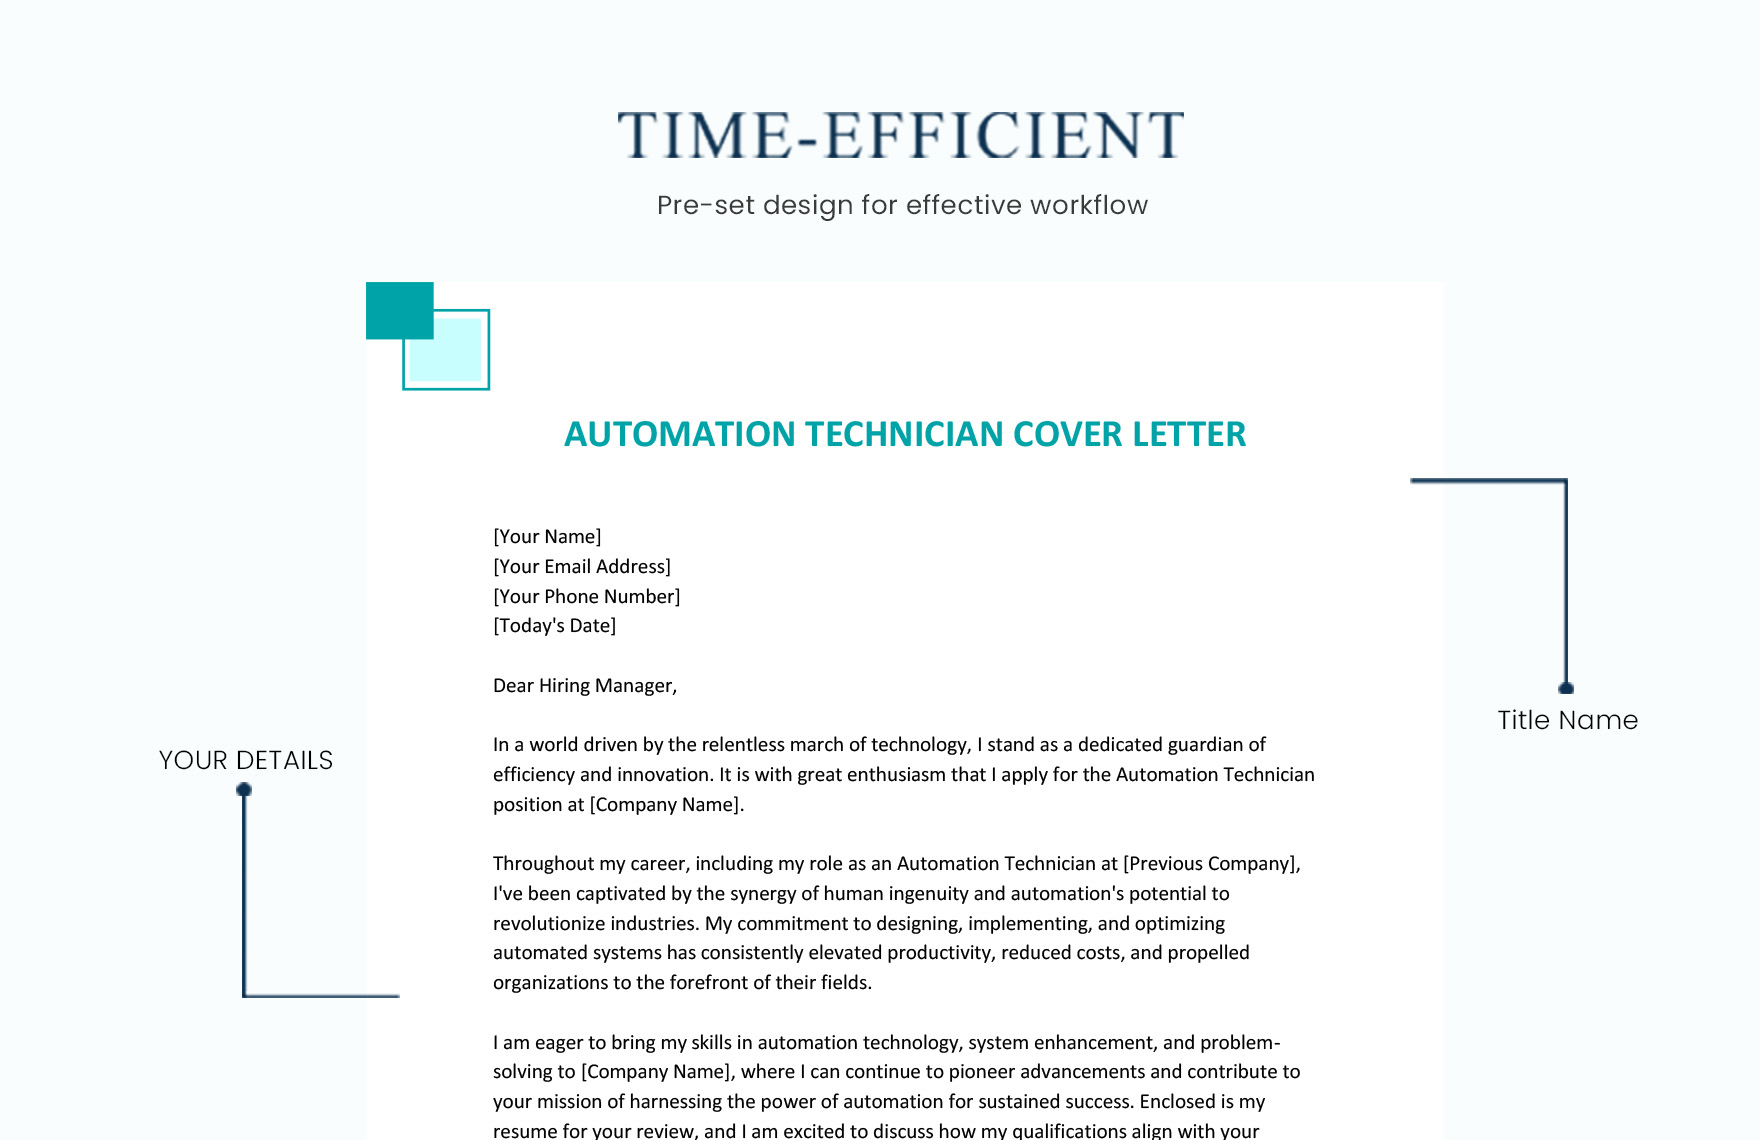 Automation Technician Cover Letter